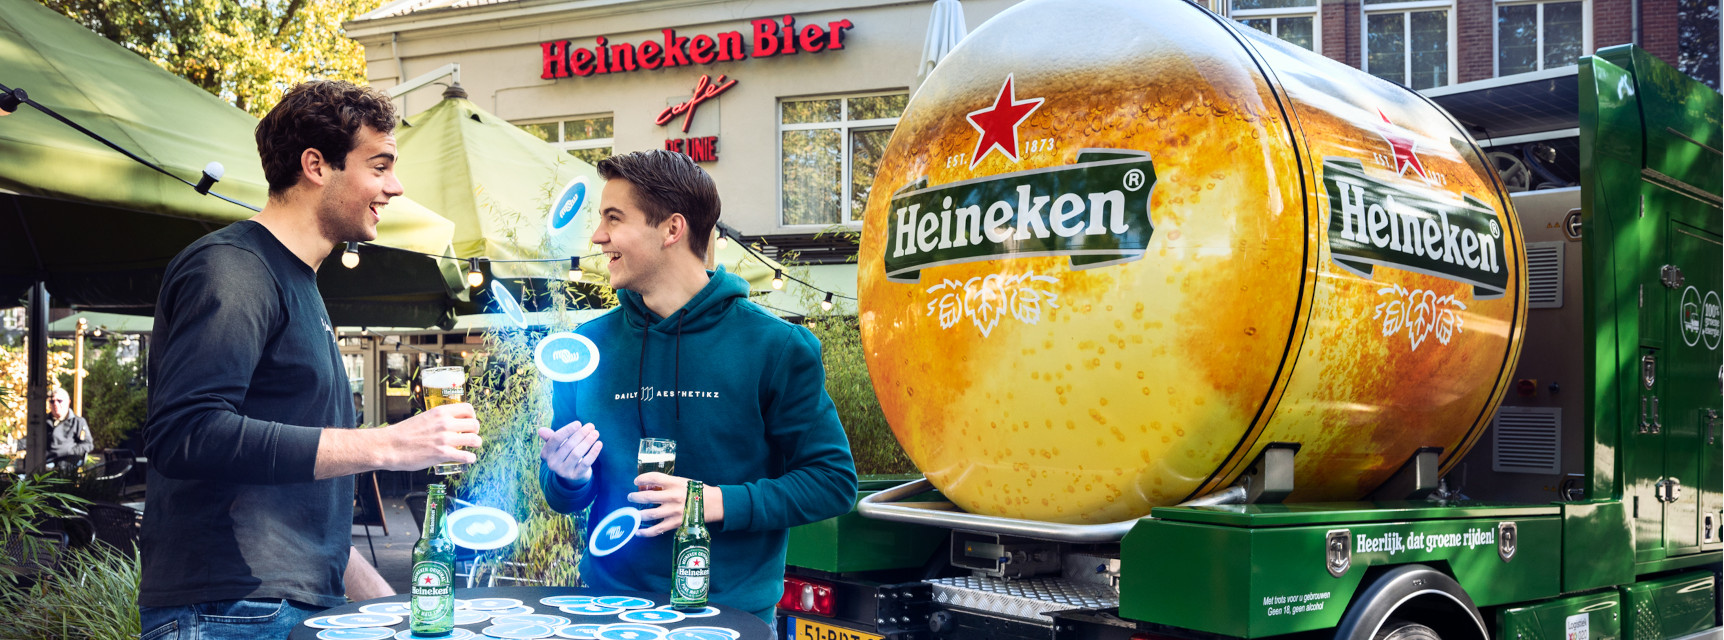 Bierwagen Heineken 1724x640